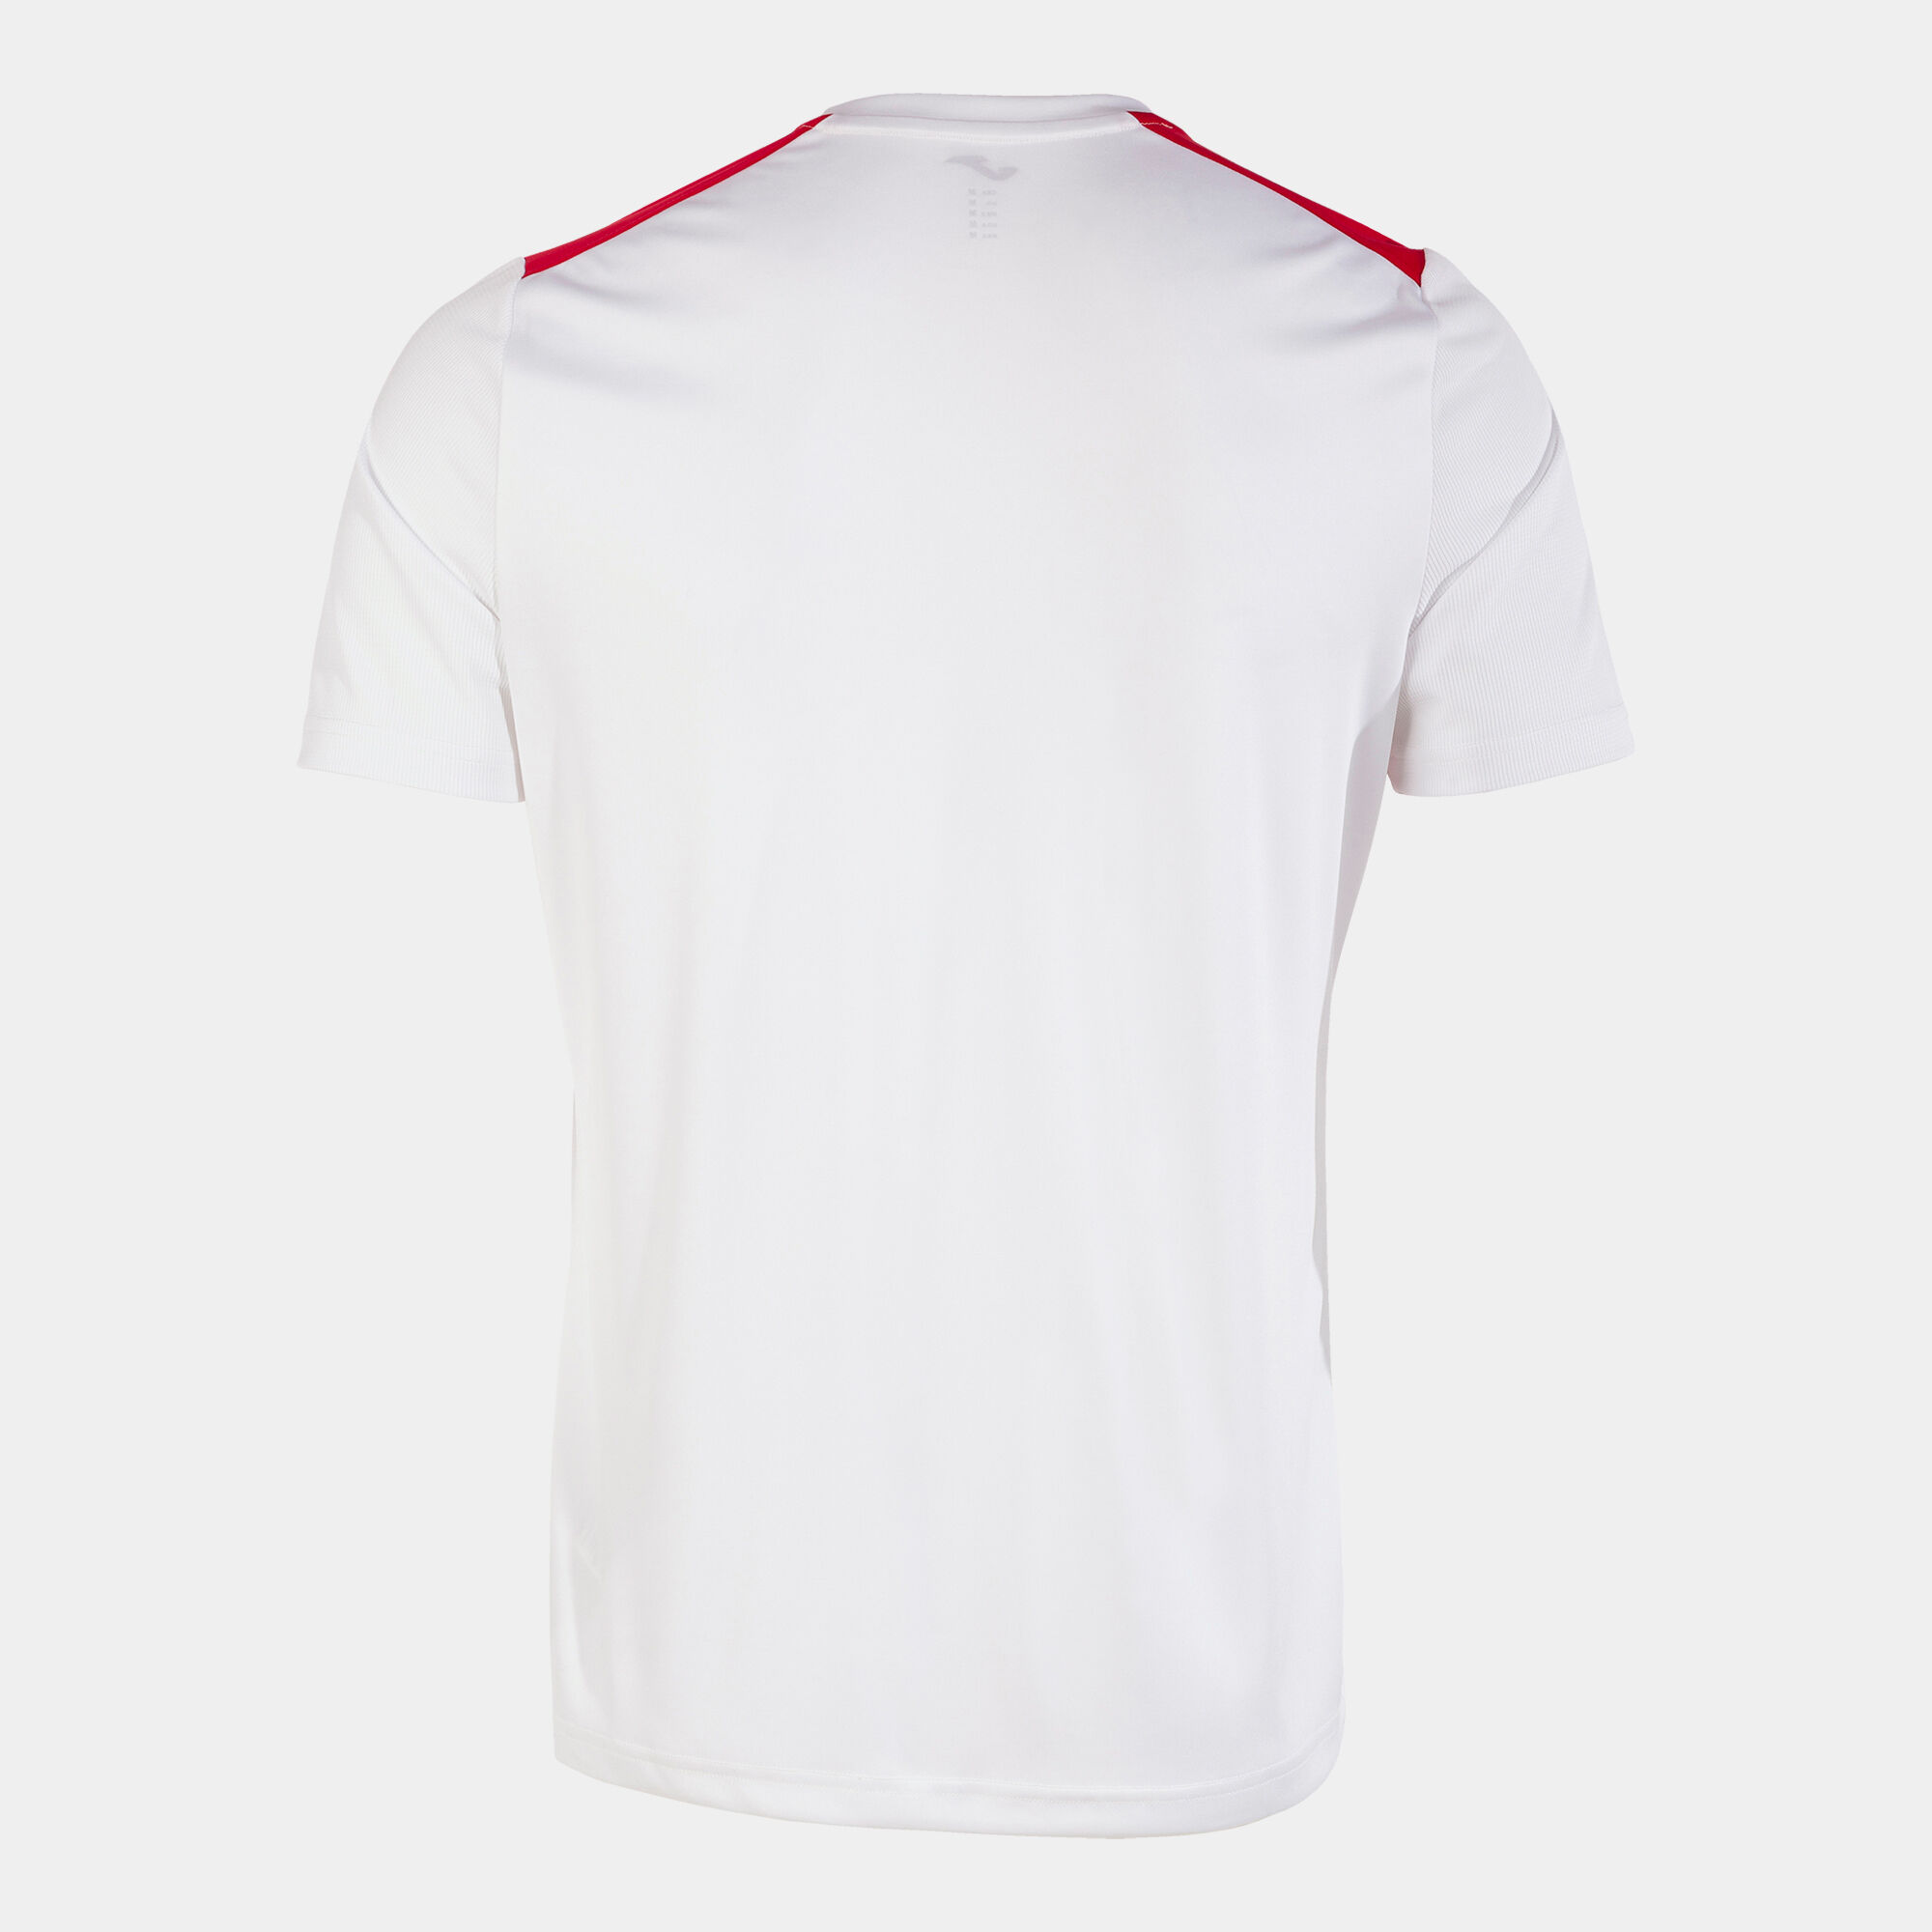 Camiseta manga corta hombre Championship VII blanco rojo